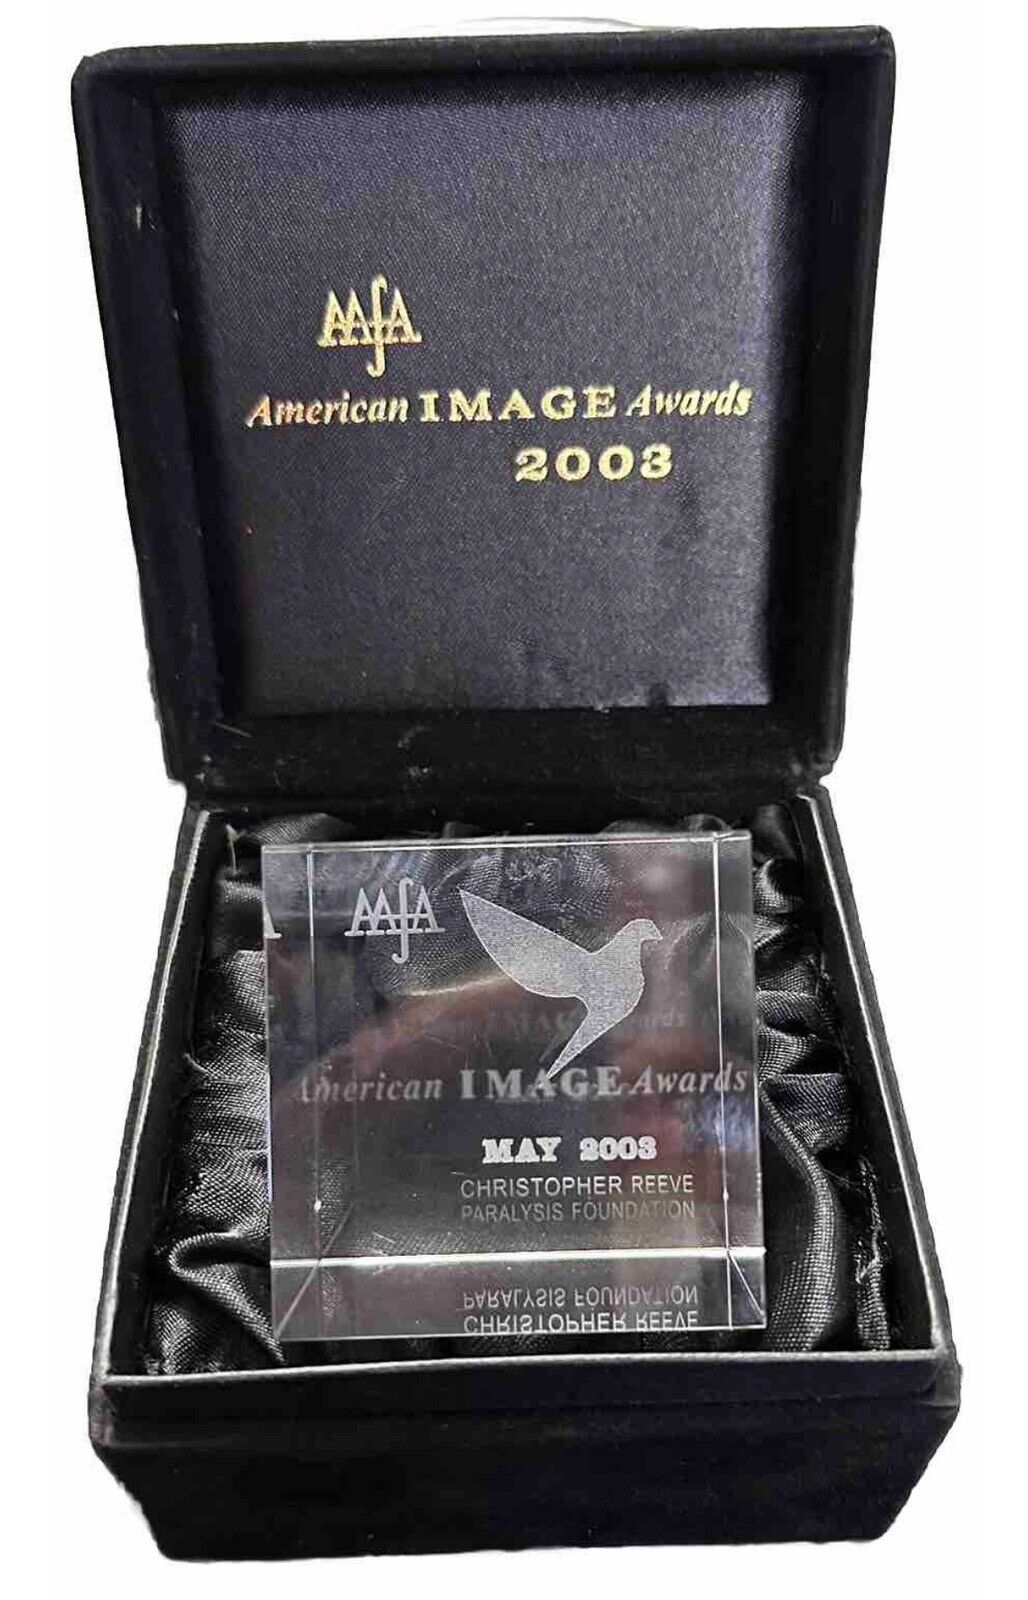 Christopher Reeve Paralysis Foundation May 19, 2003 AAFA American Image Awards